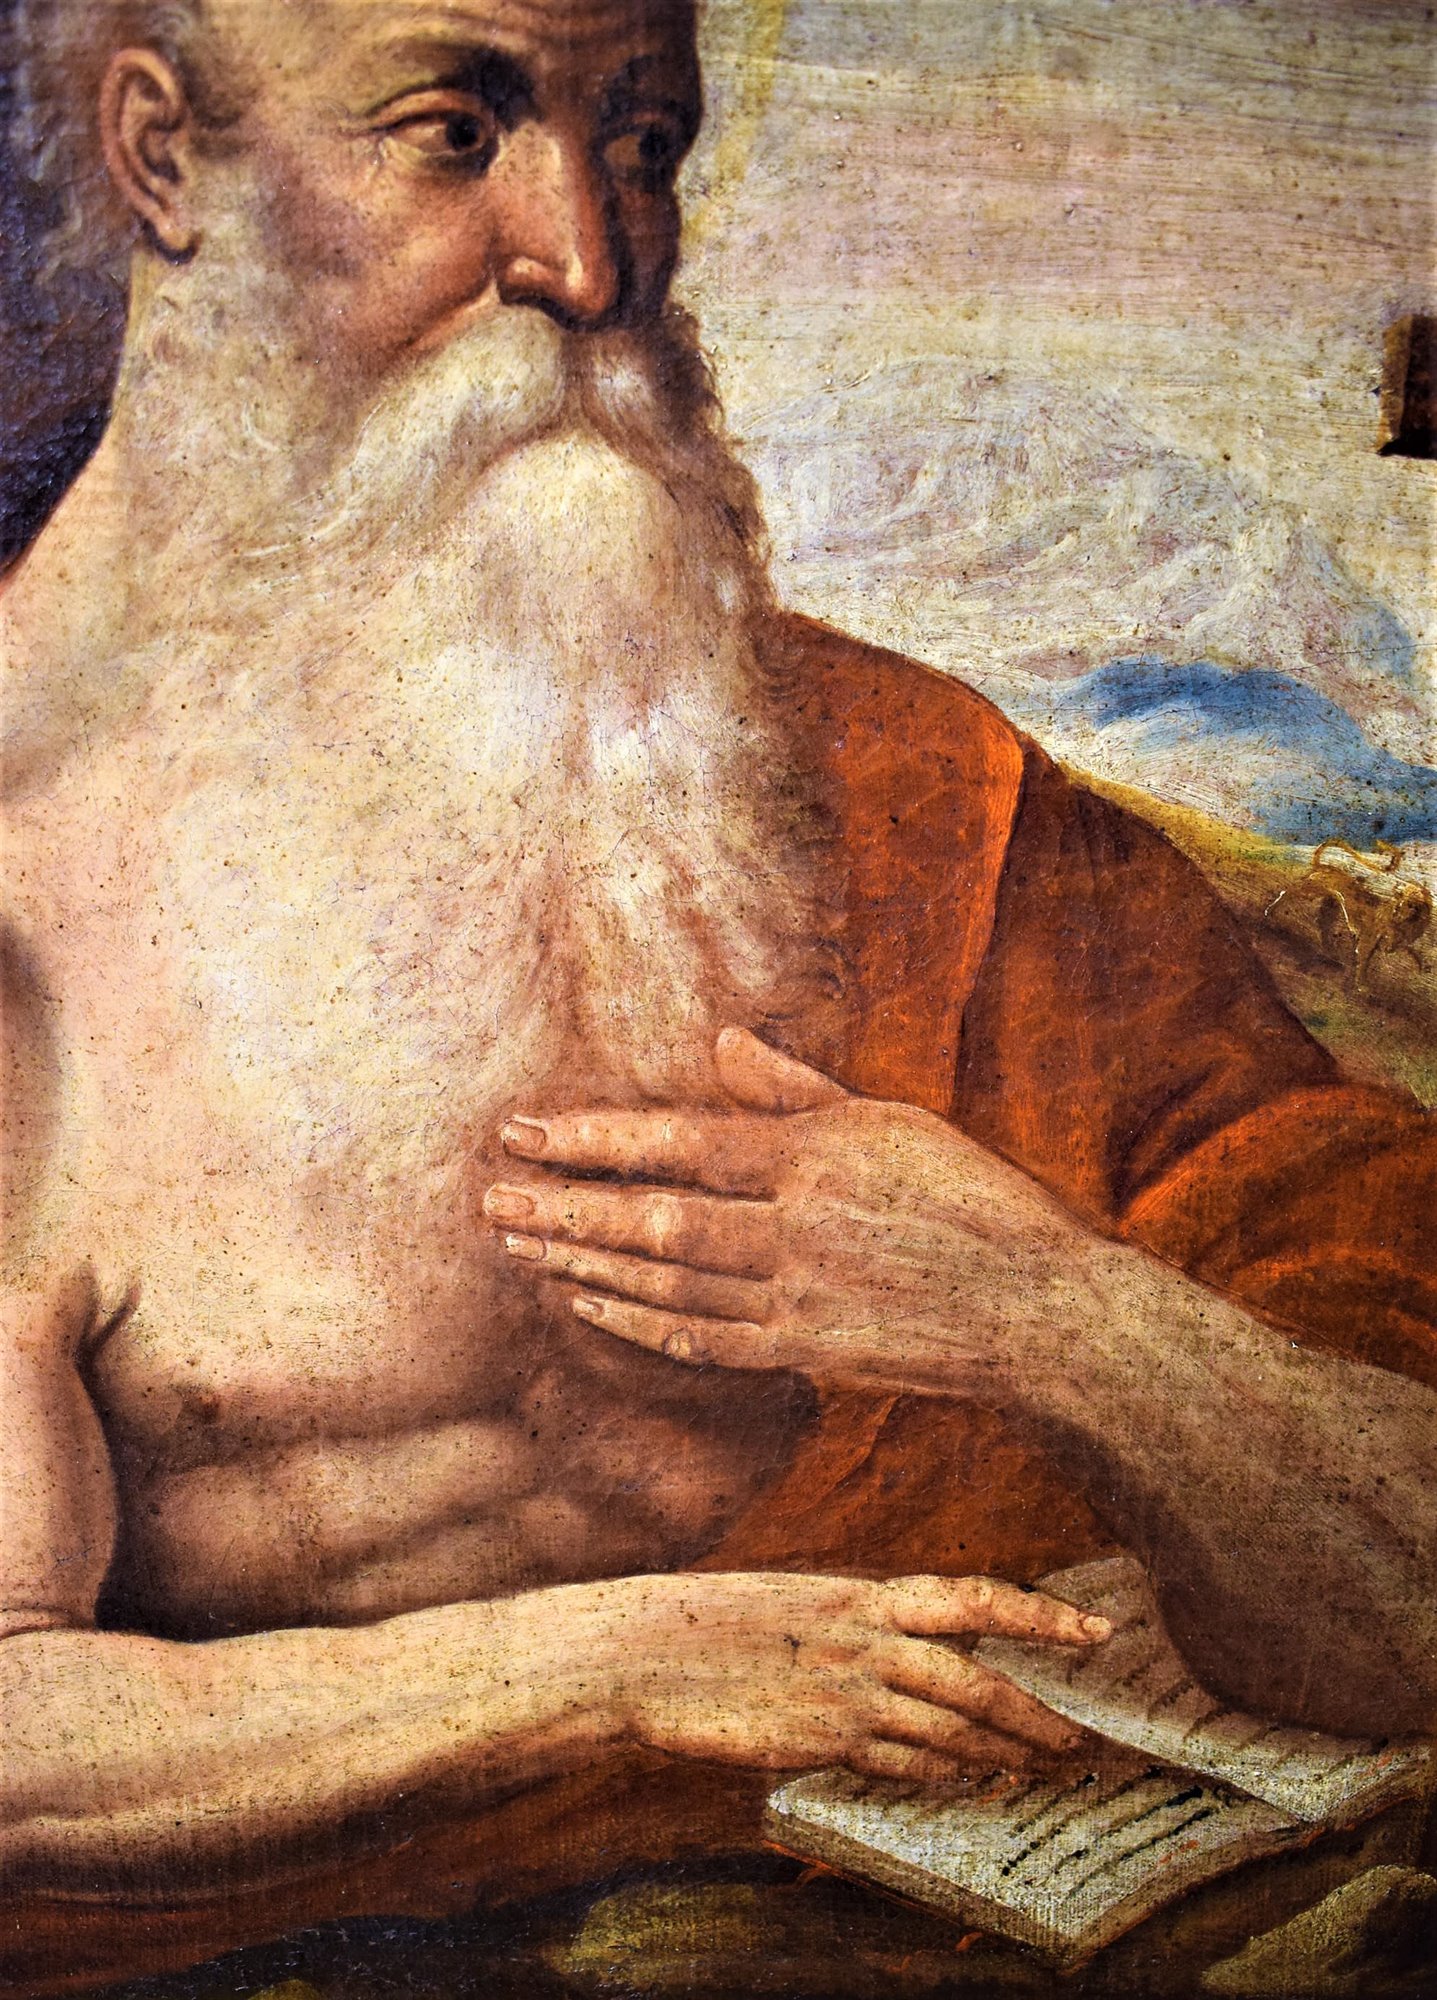 San Girolamo in meditazione